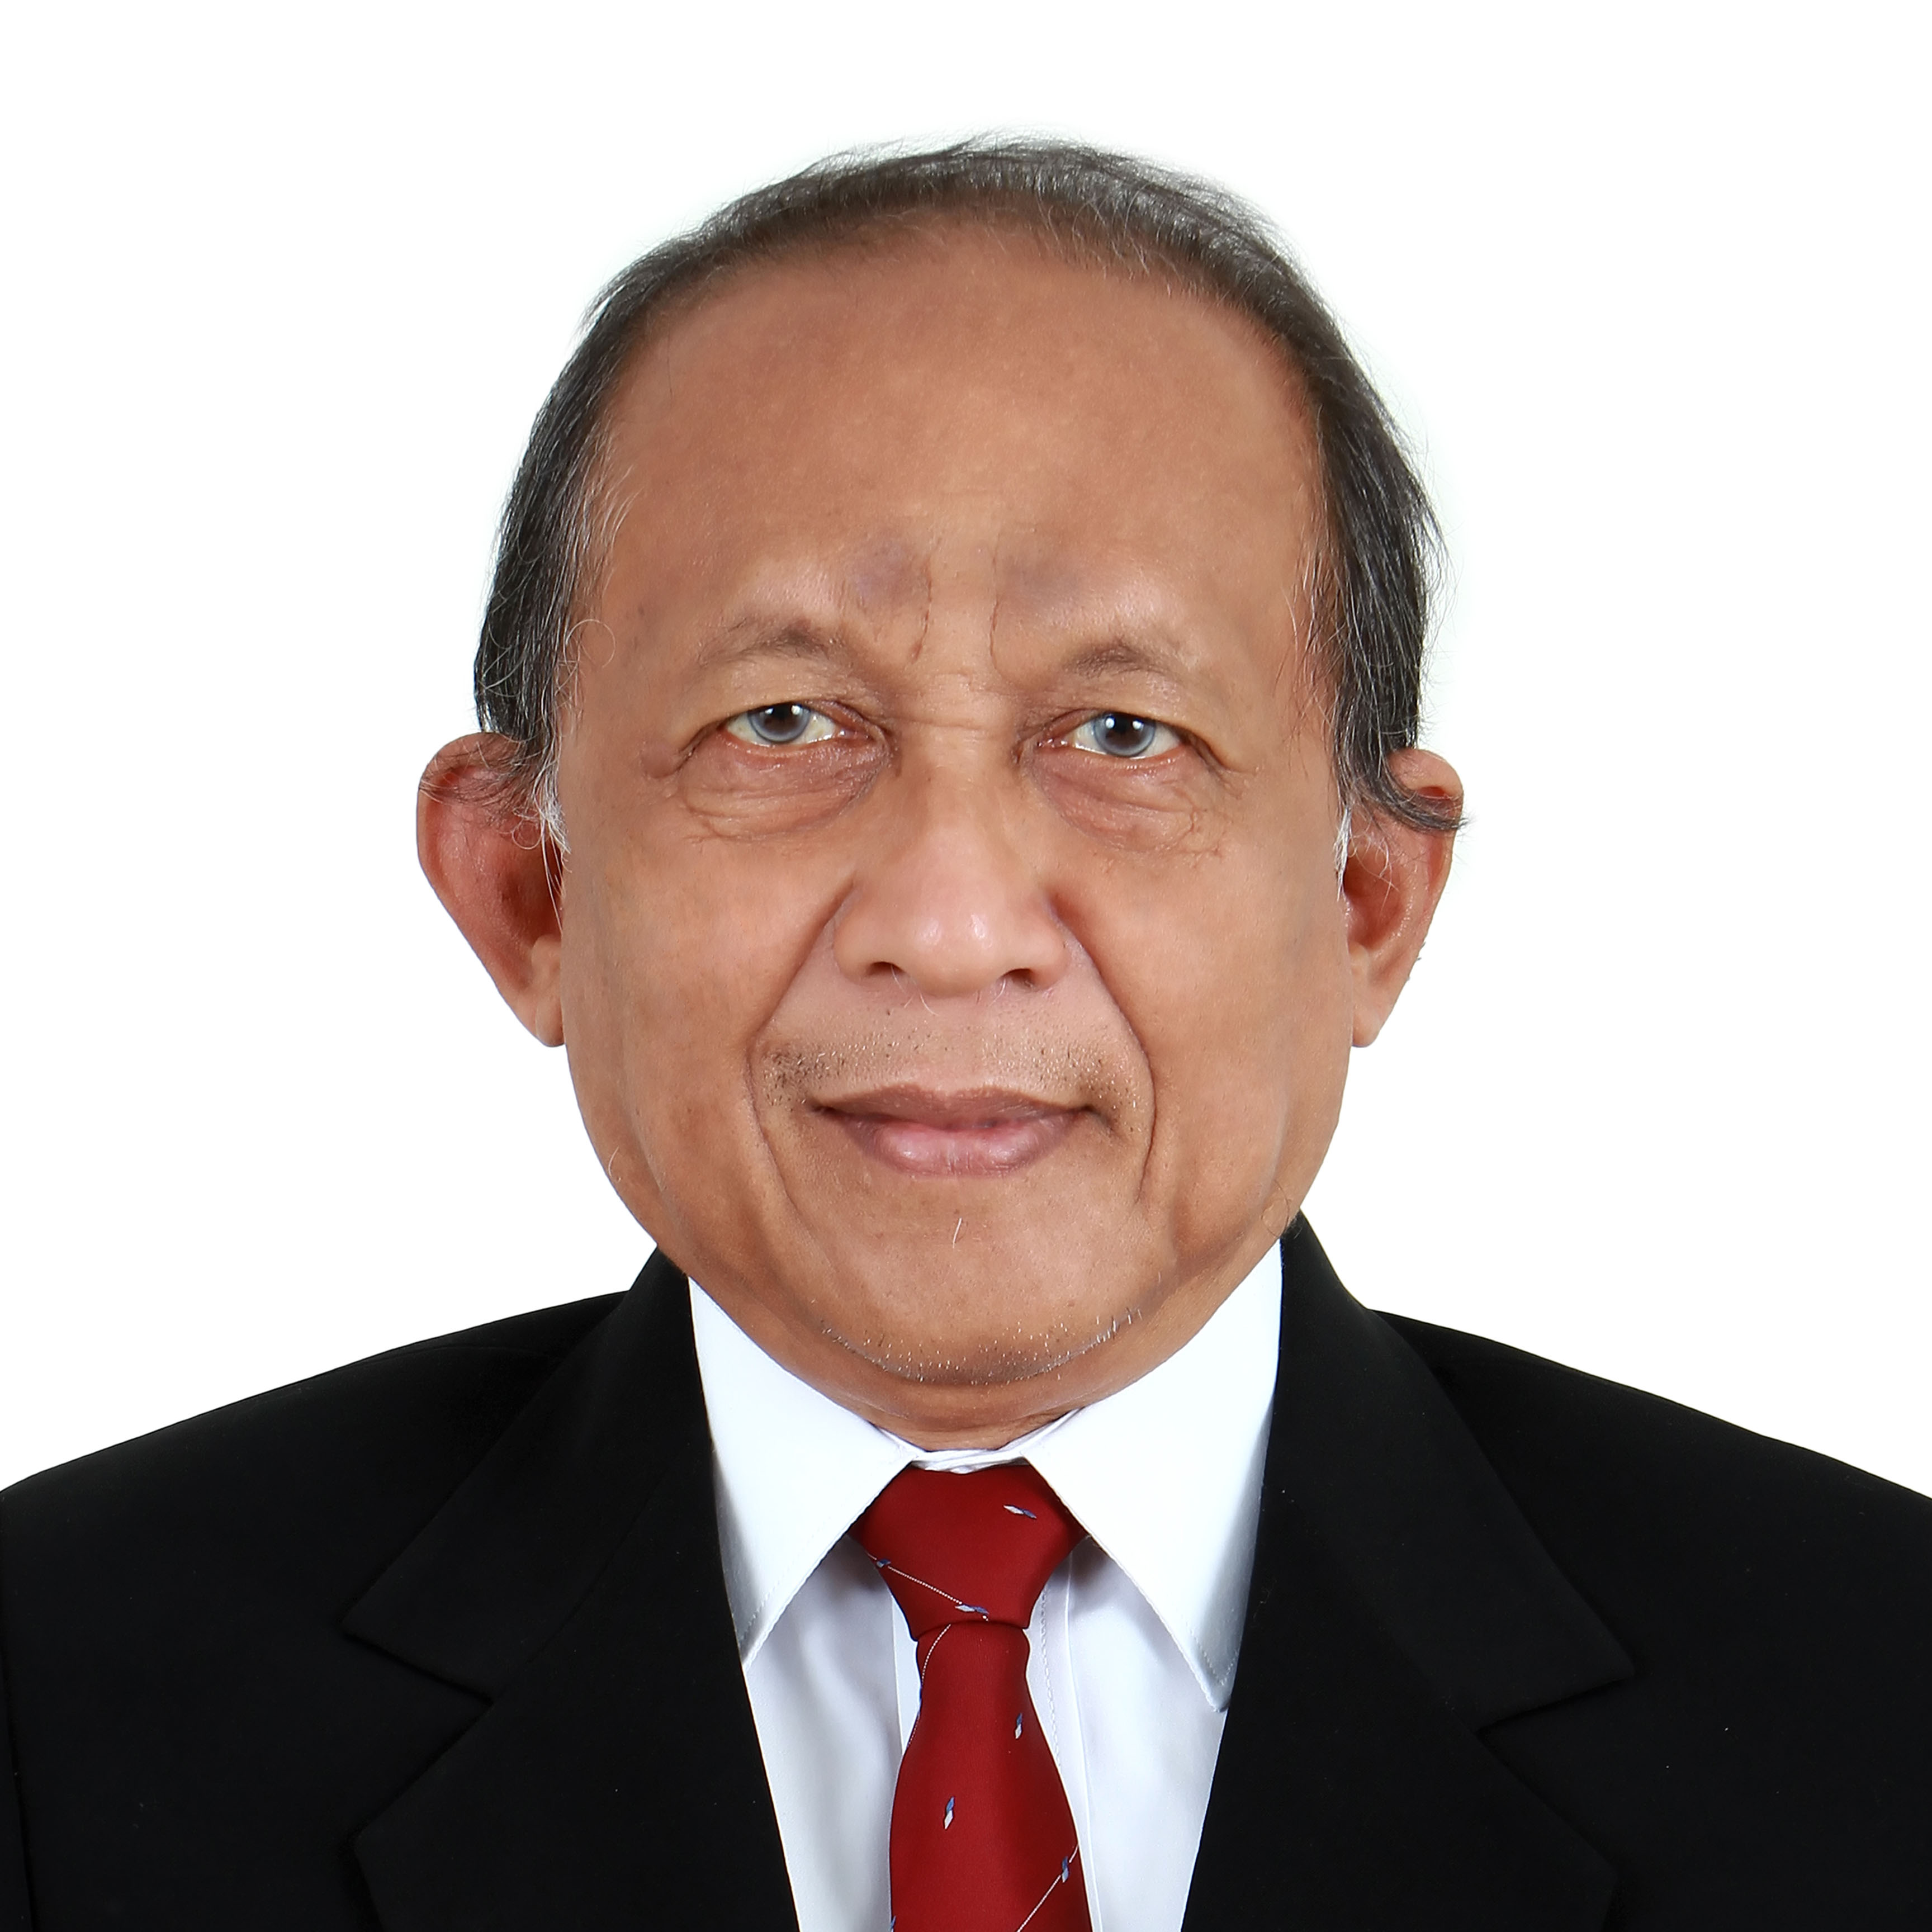 Prof. Drs. Heddy Shri Ahimsa-Putra, M.A., M.Phil., Ph.D.